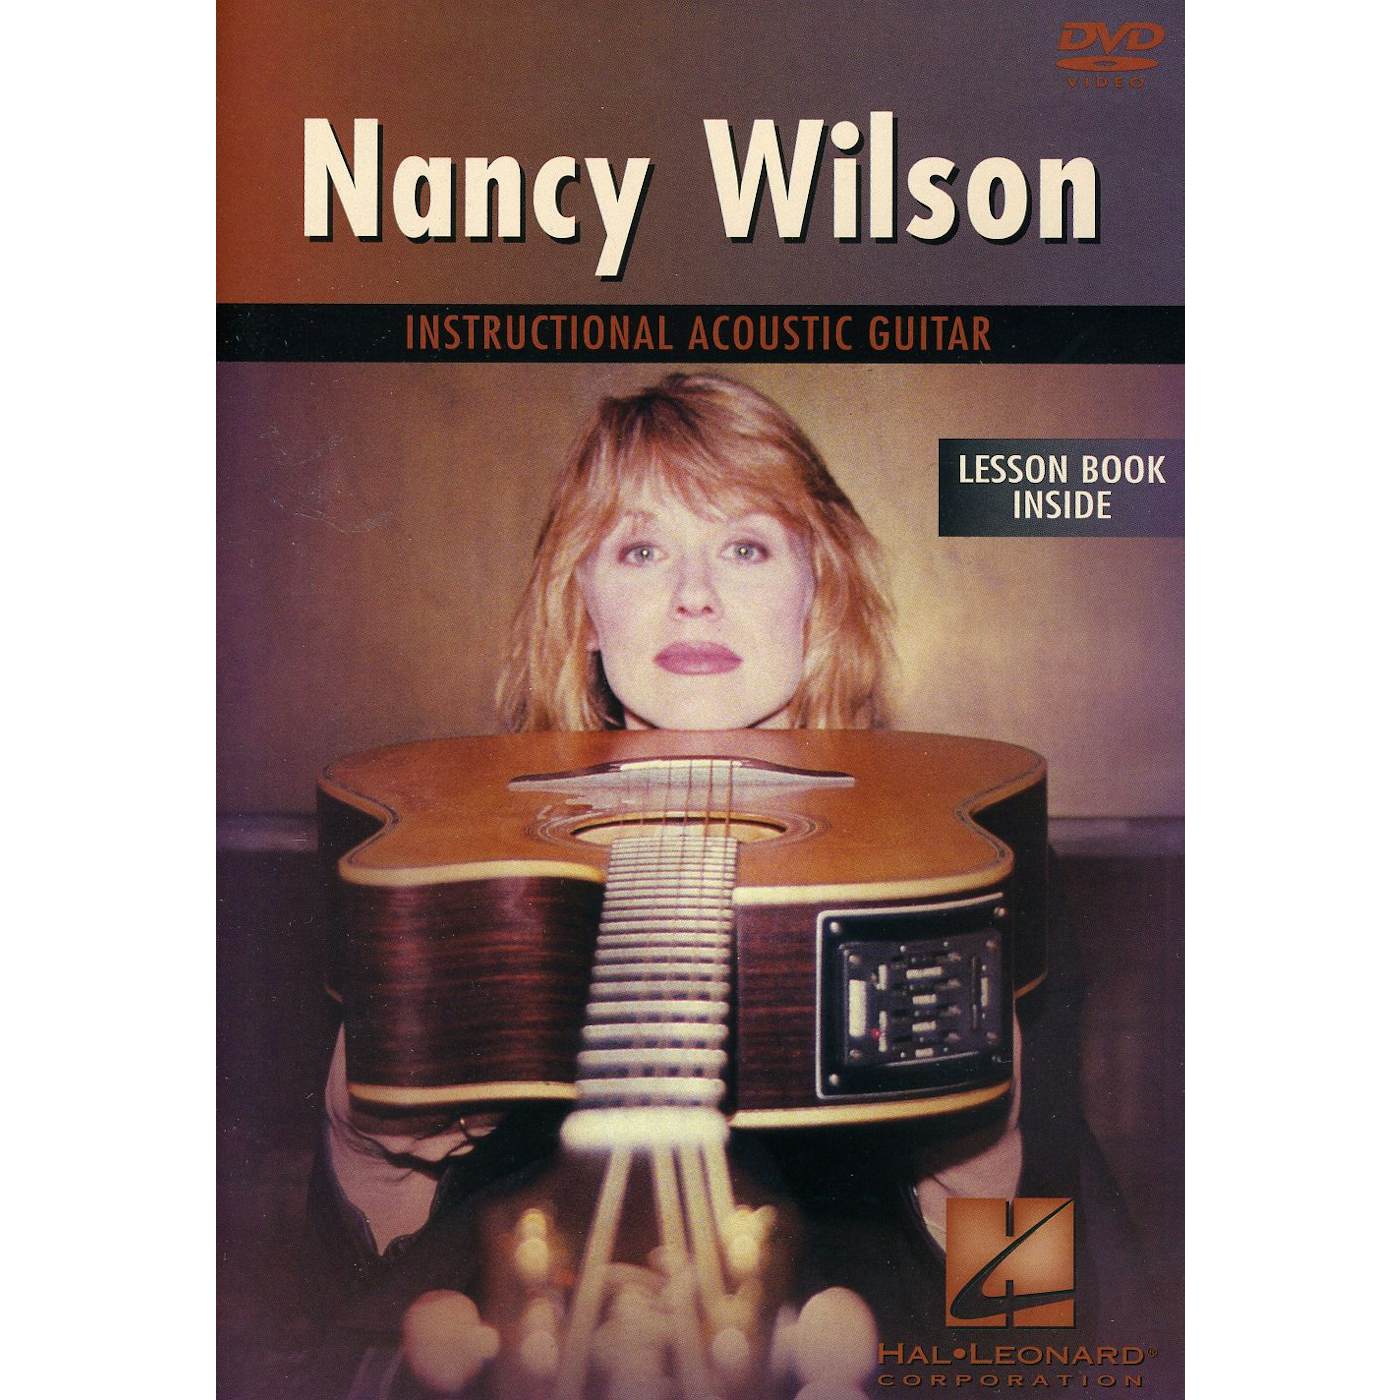 Nancy Wilson INSTRUCTIONAL ACOUSTIC GUITAR DVD DVD